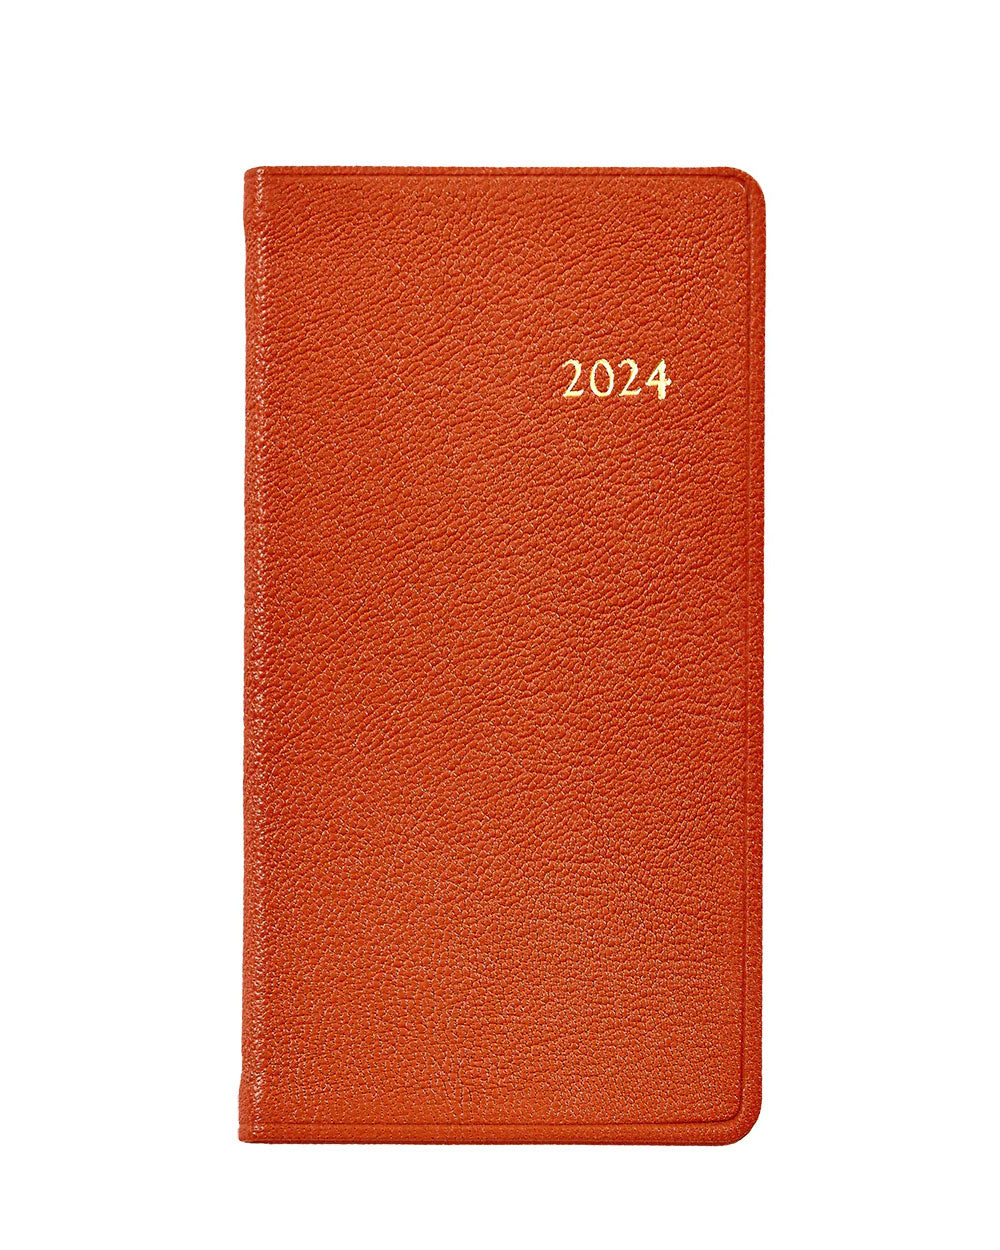 2024 Pocket Datebook in Orange